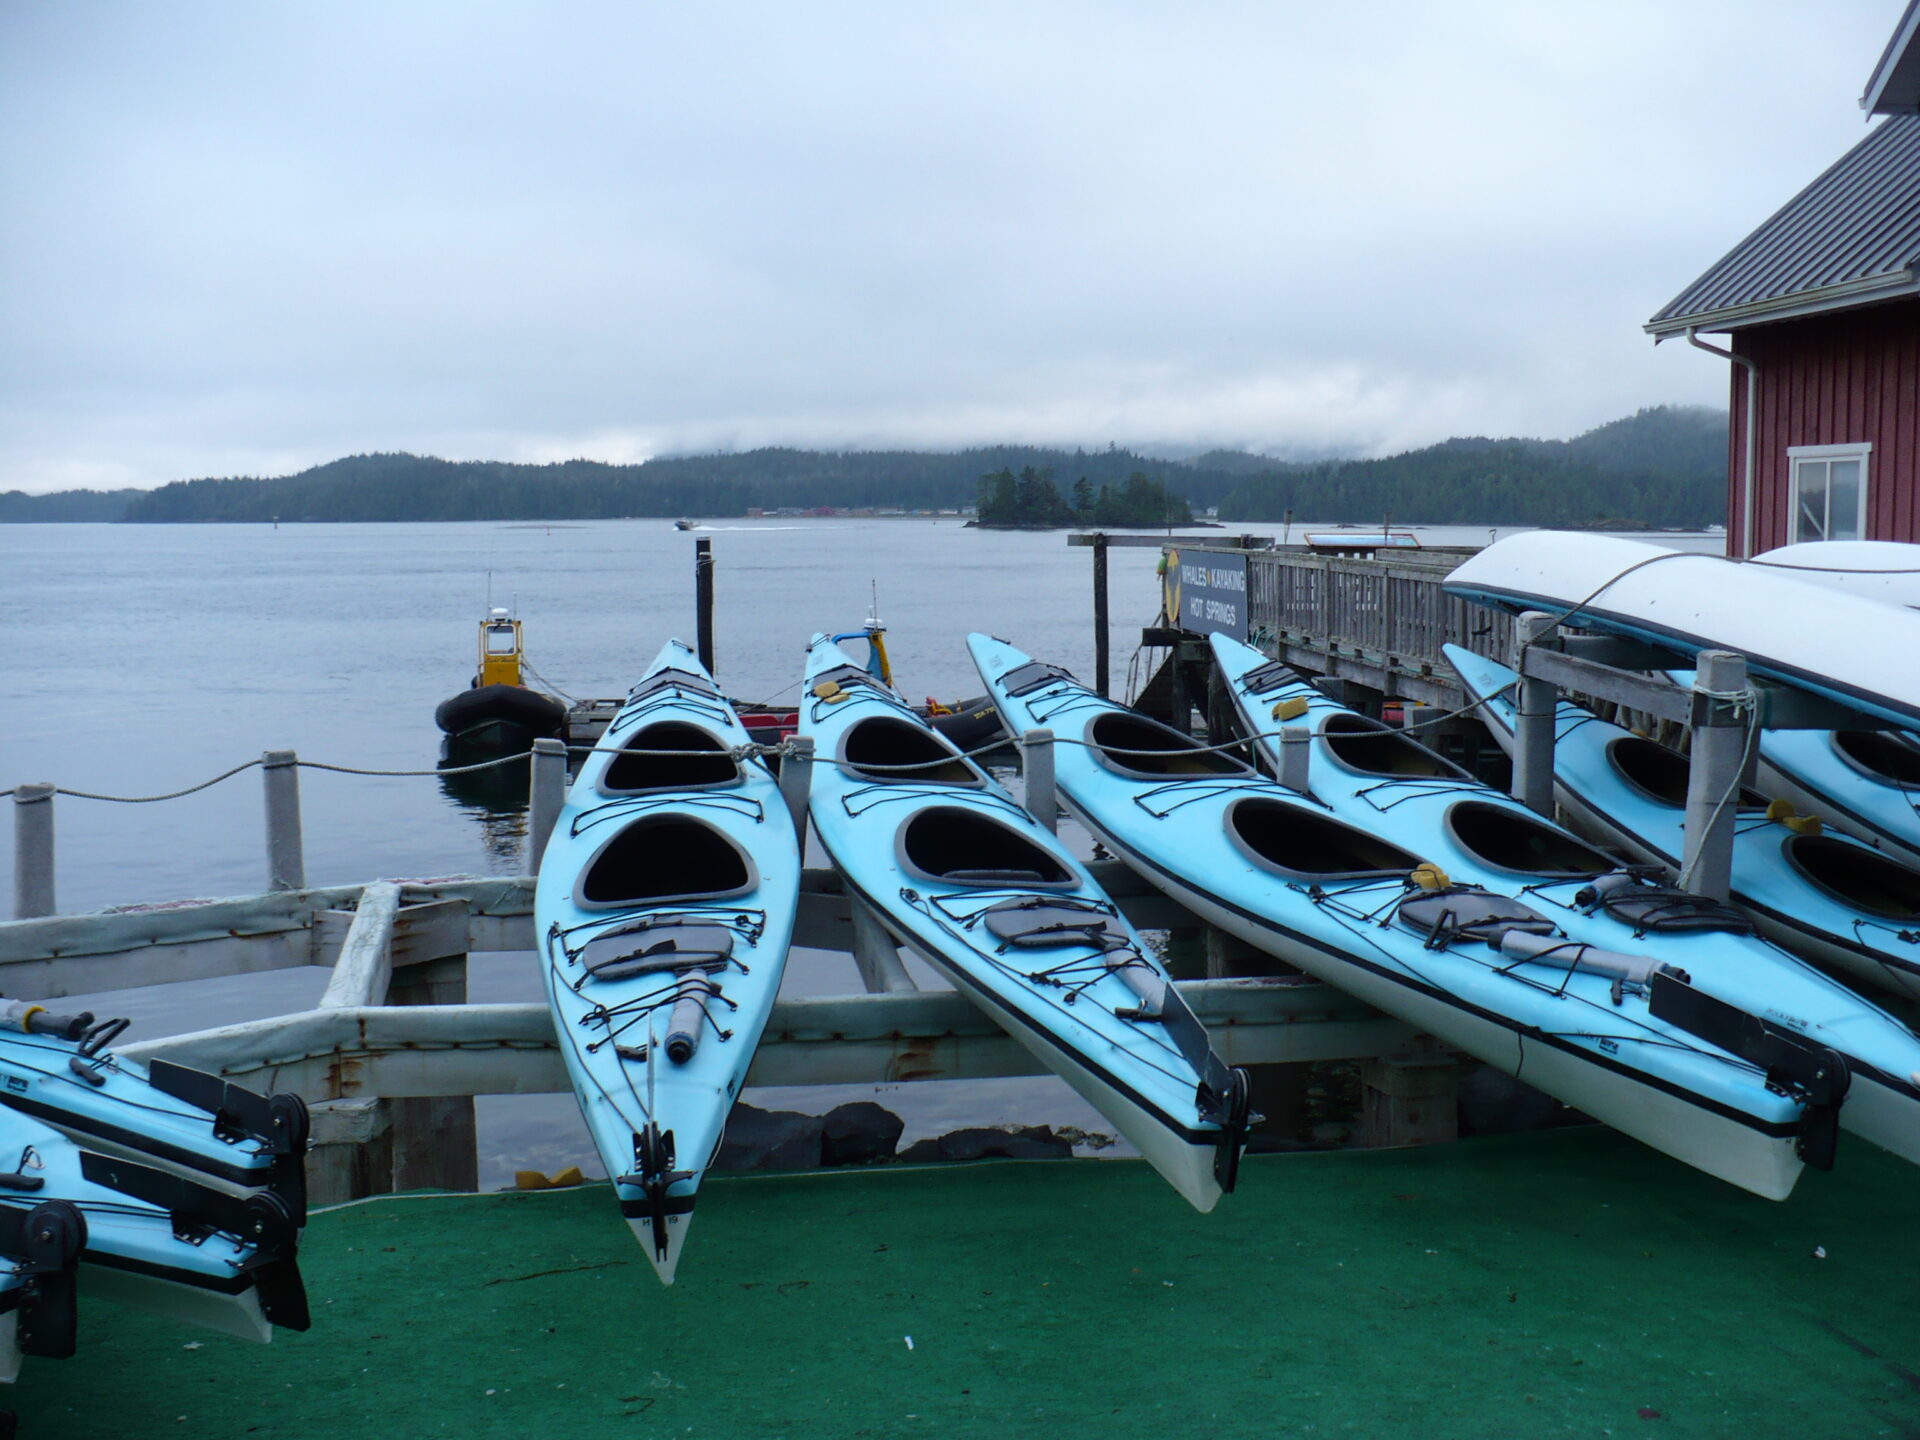 adventure tour with kayaks on vancouver island | abenteuerreise mit kajaks auf vancouver island